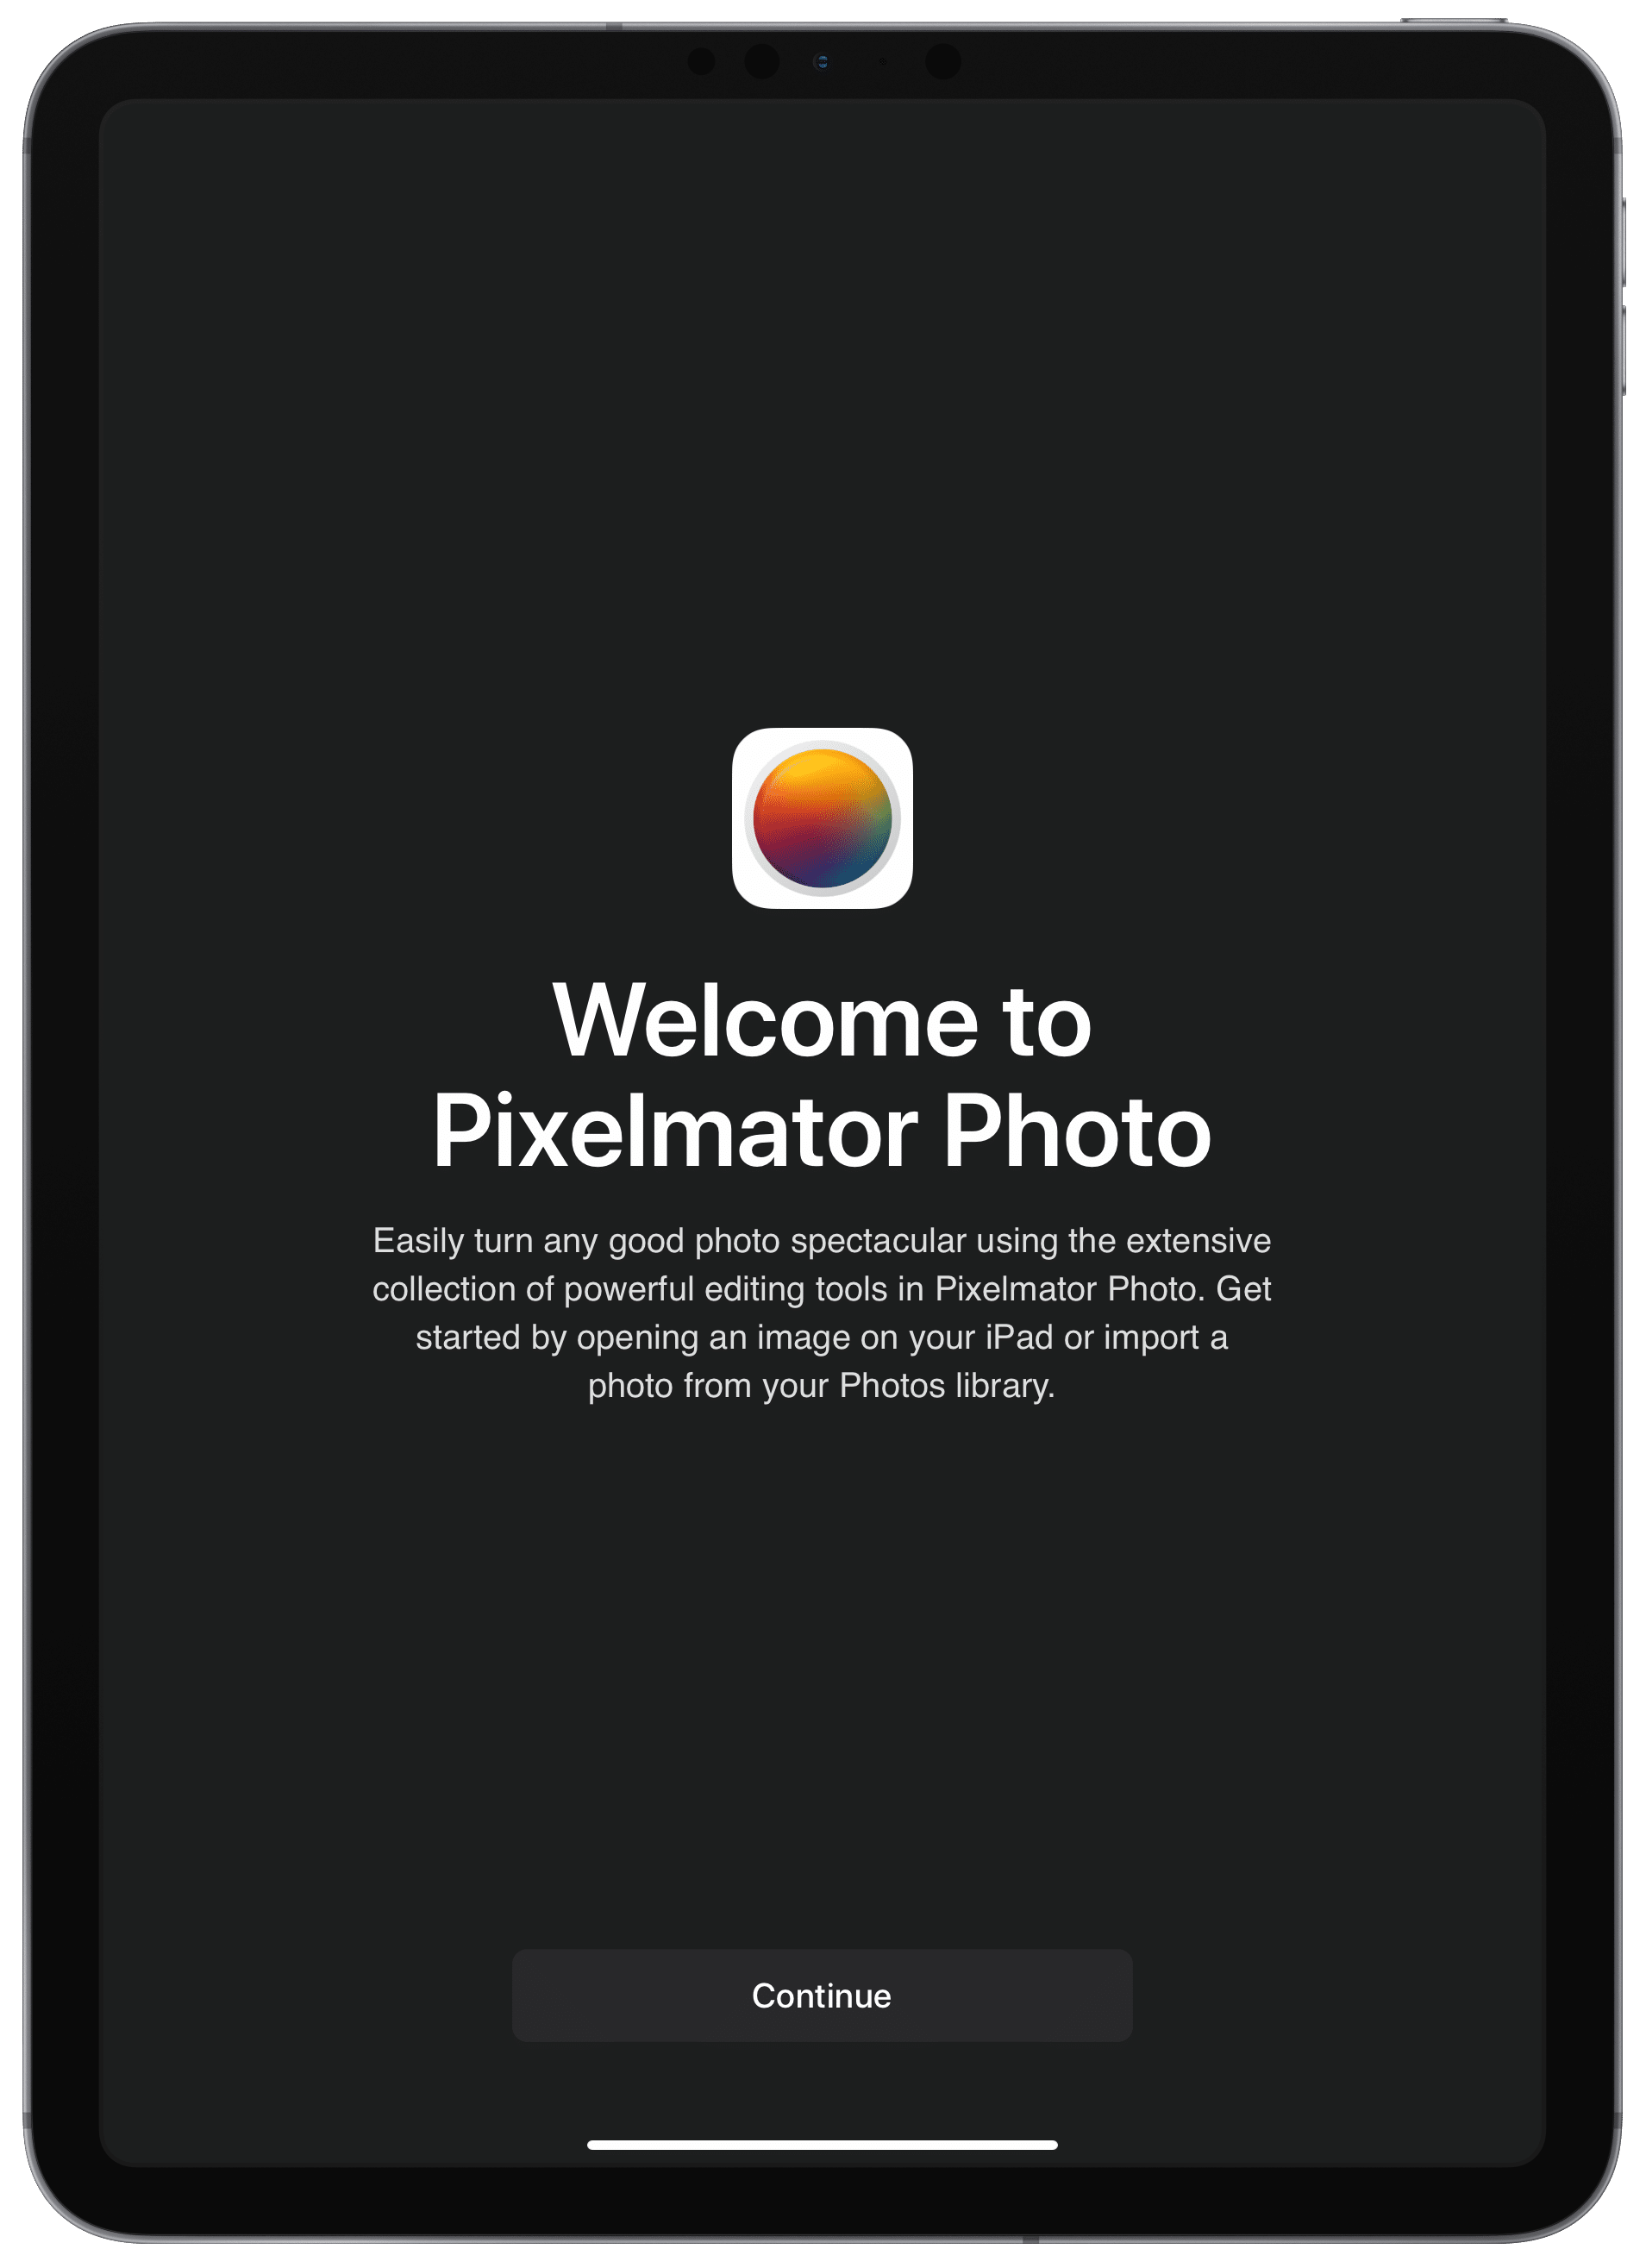 Pixelmator Photo welcome screen